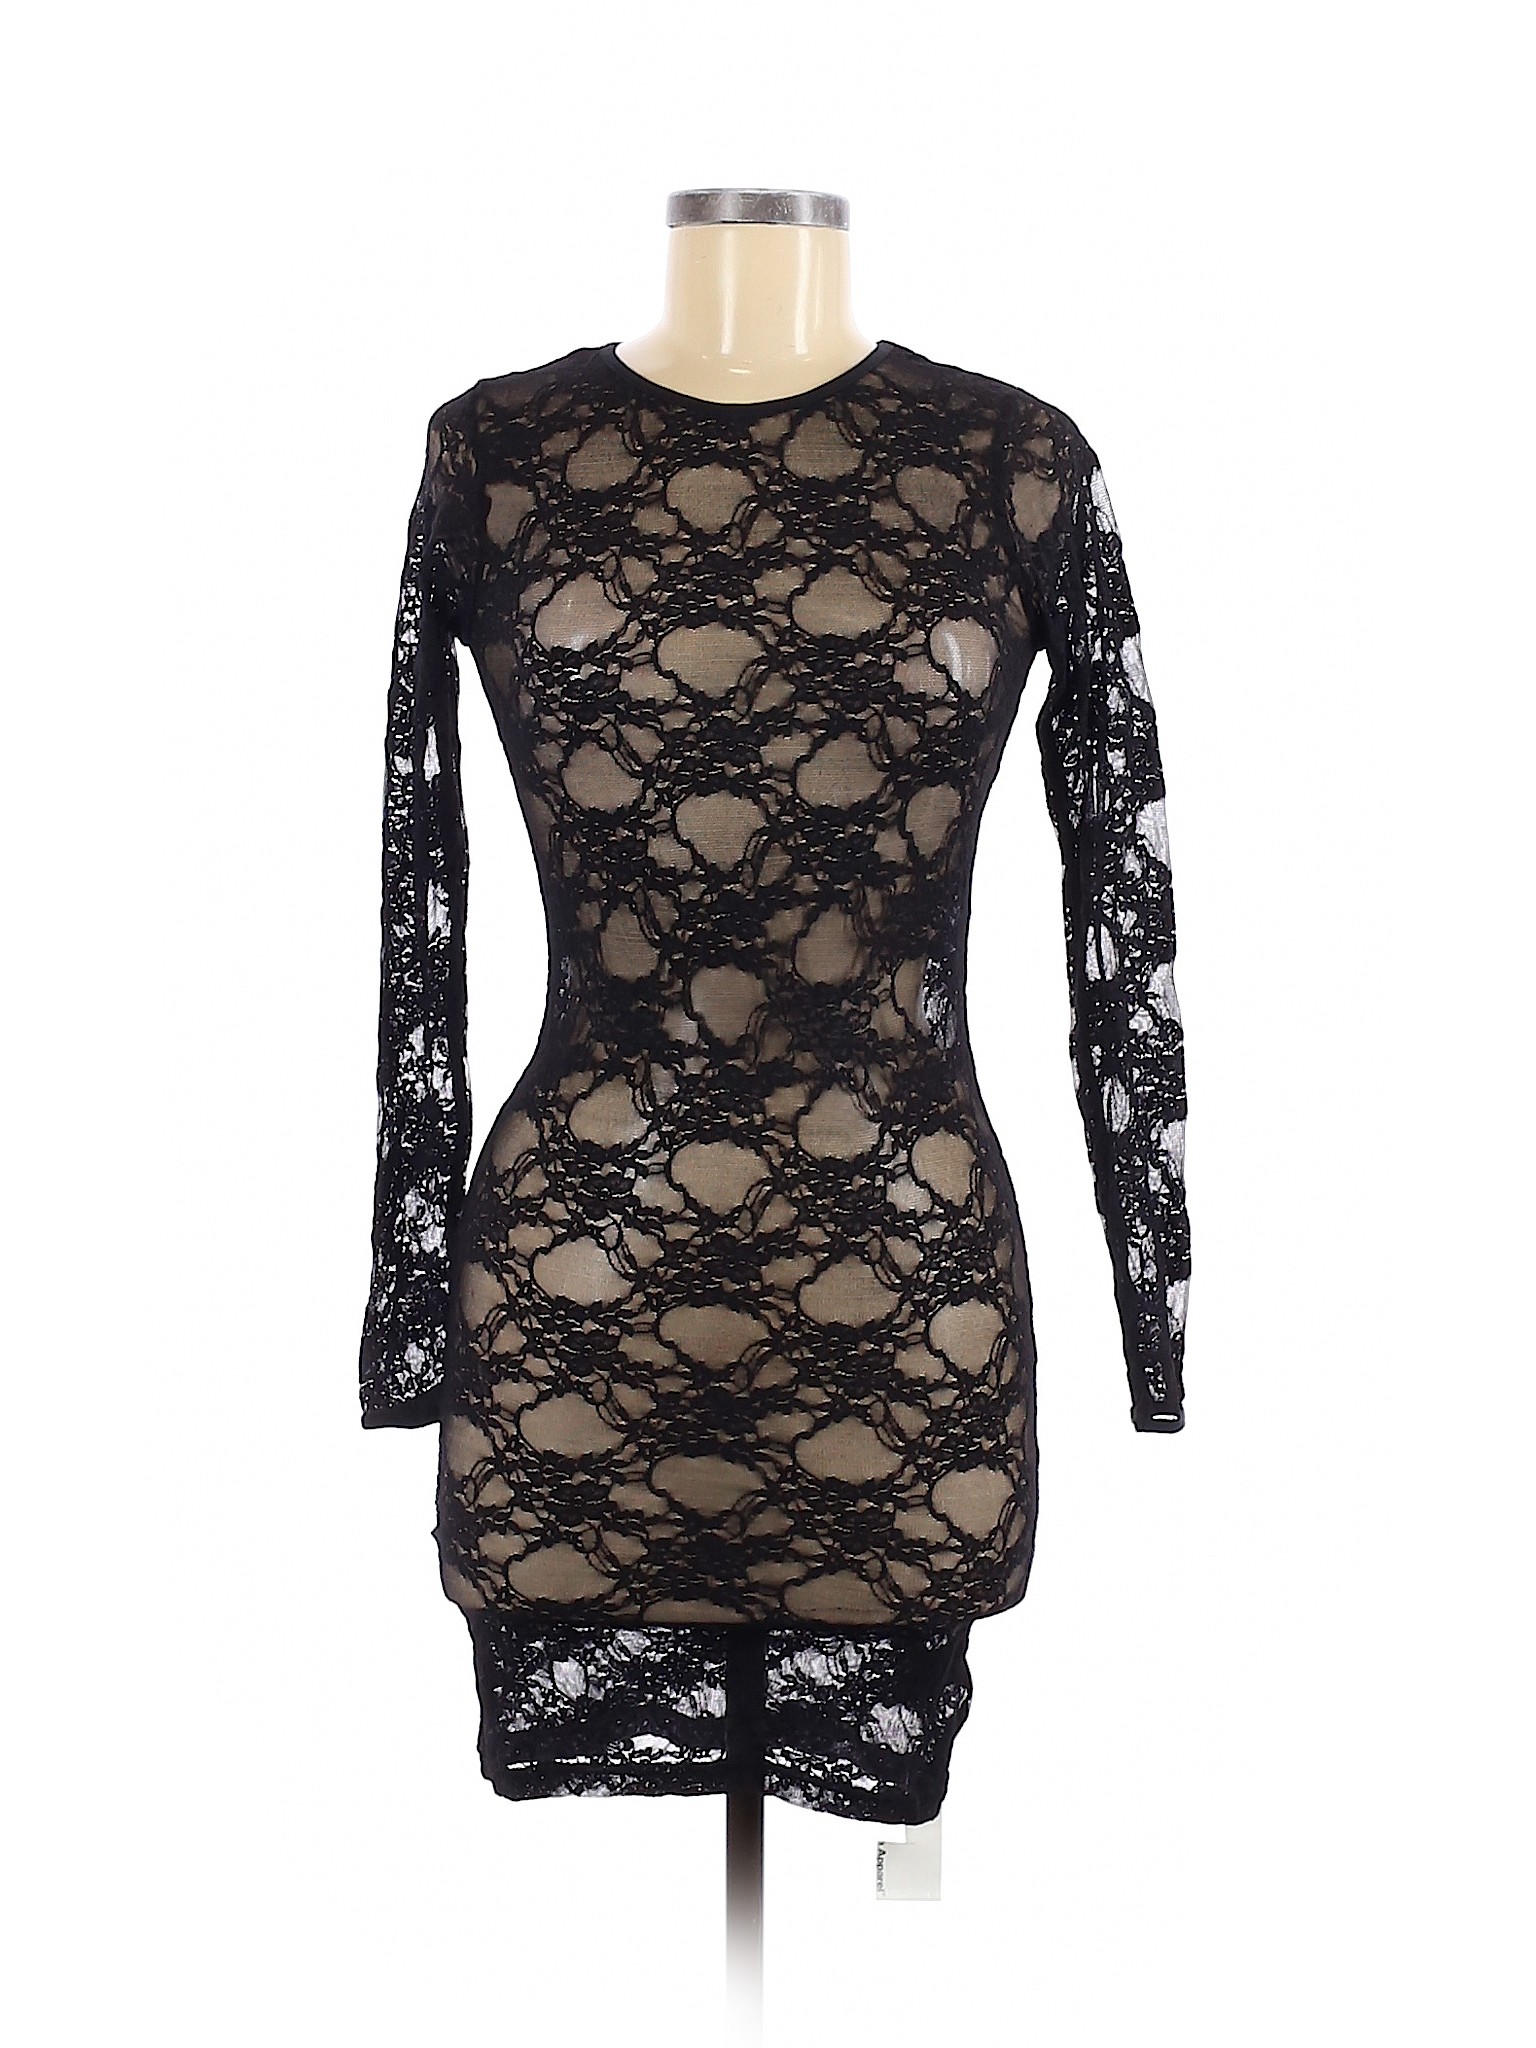 NWT American Apparel Women Black Cocktail Dress M | eBay